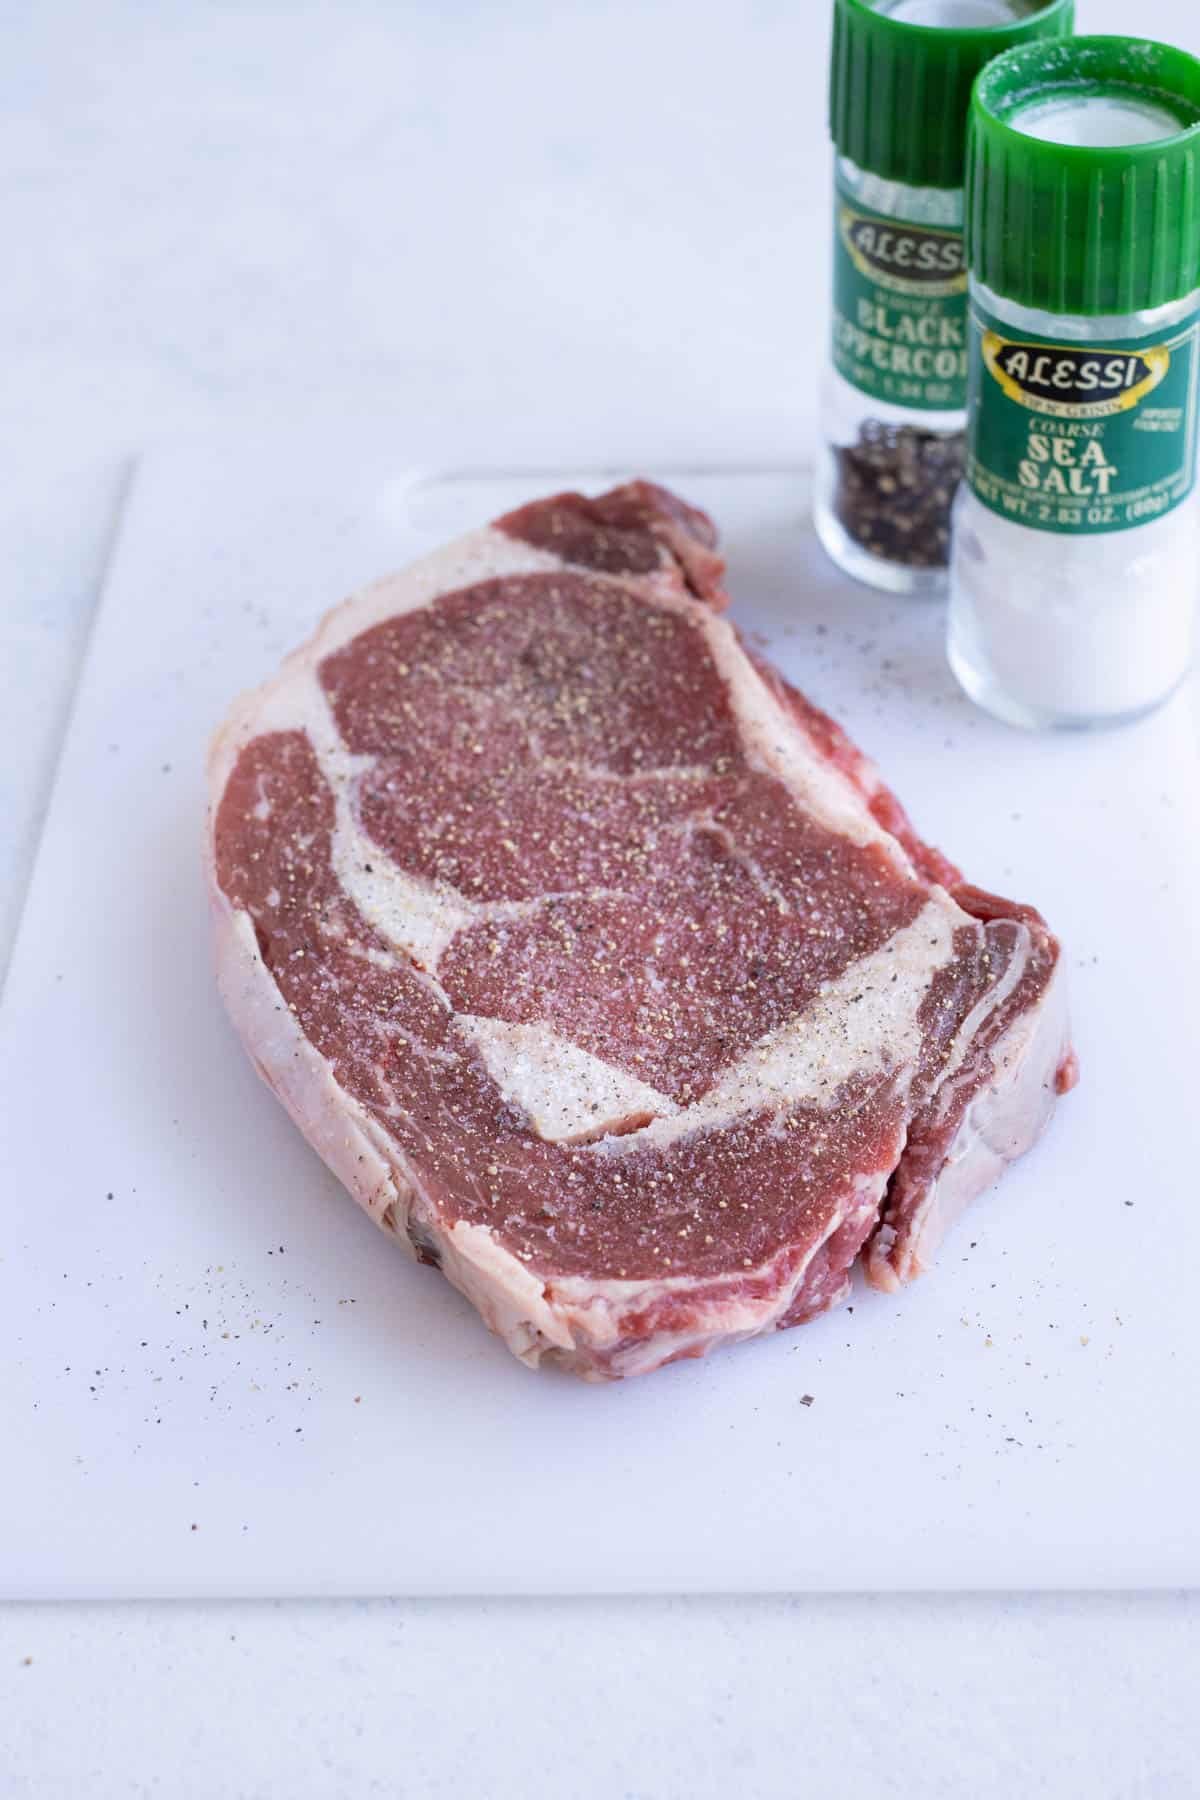 Steak is seasoned with salt and pepper.